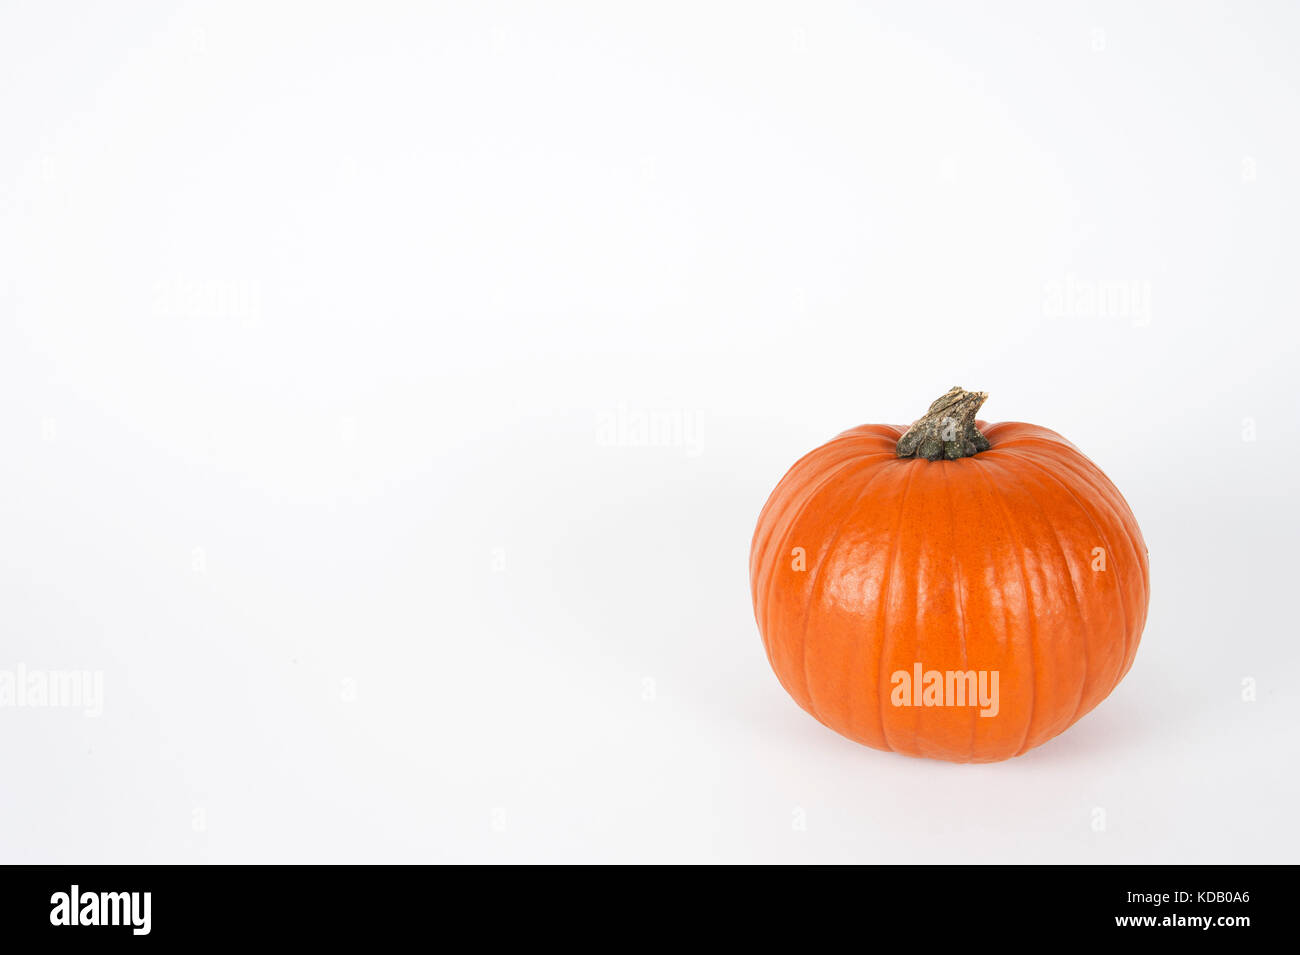 Orange pumpkin on a white background. Stock Photo